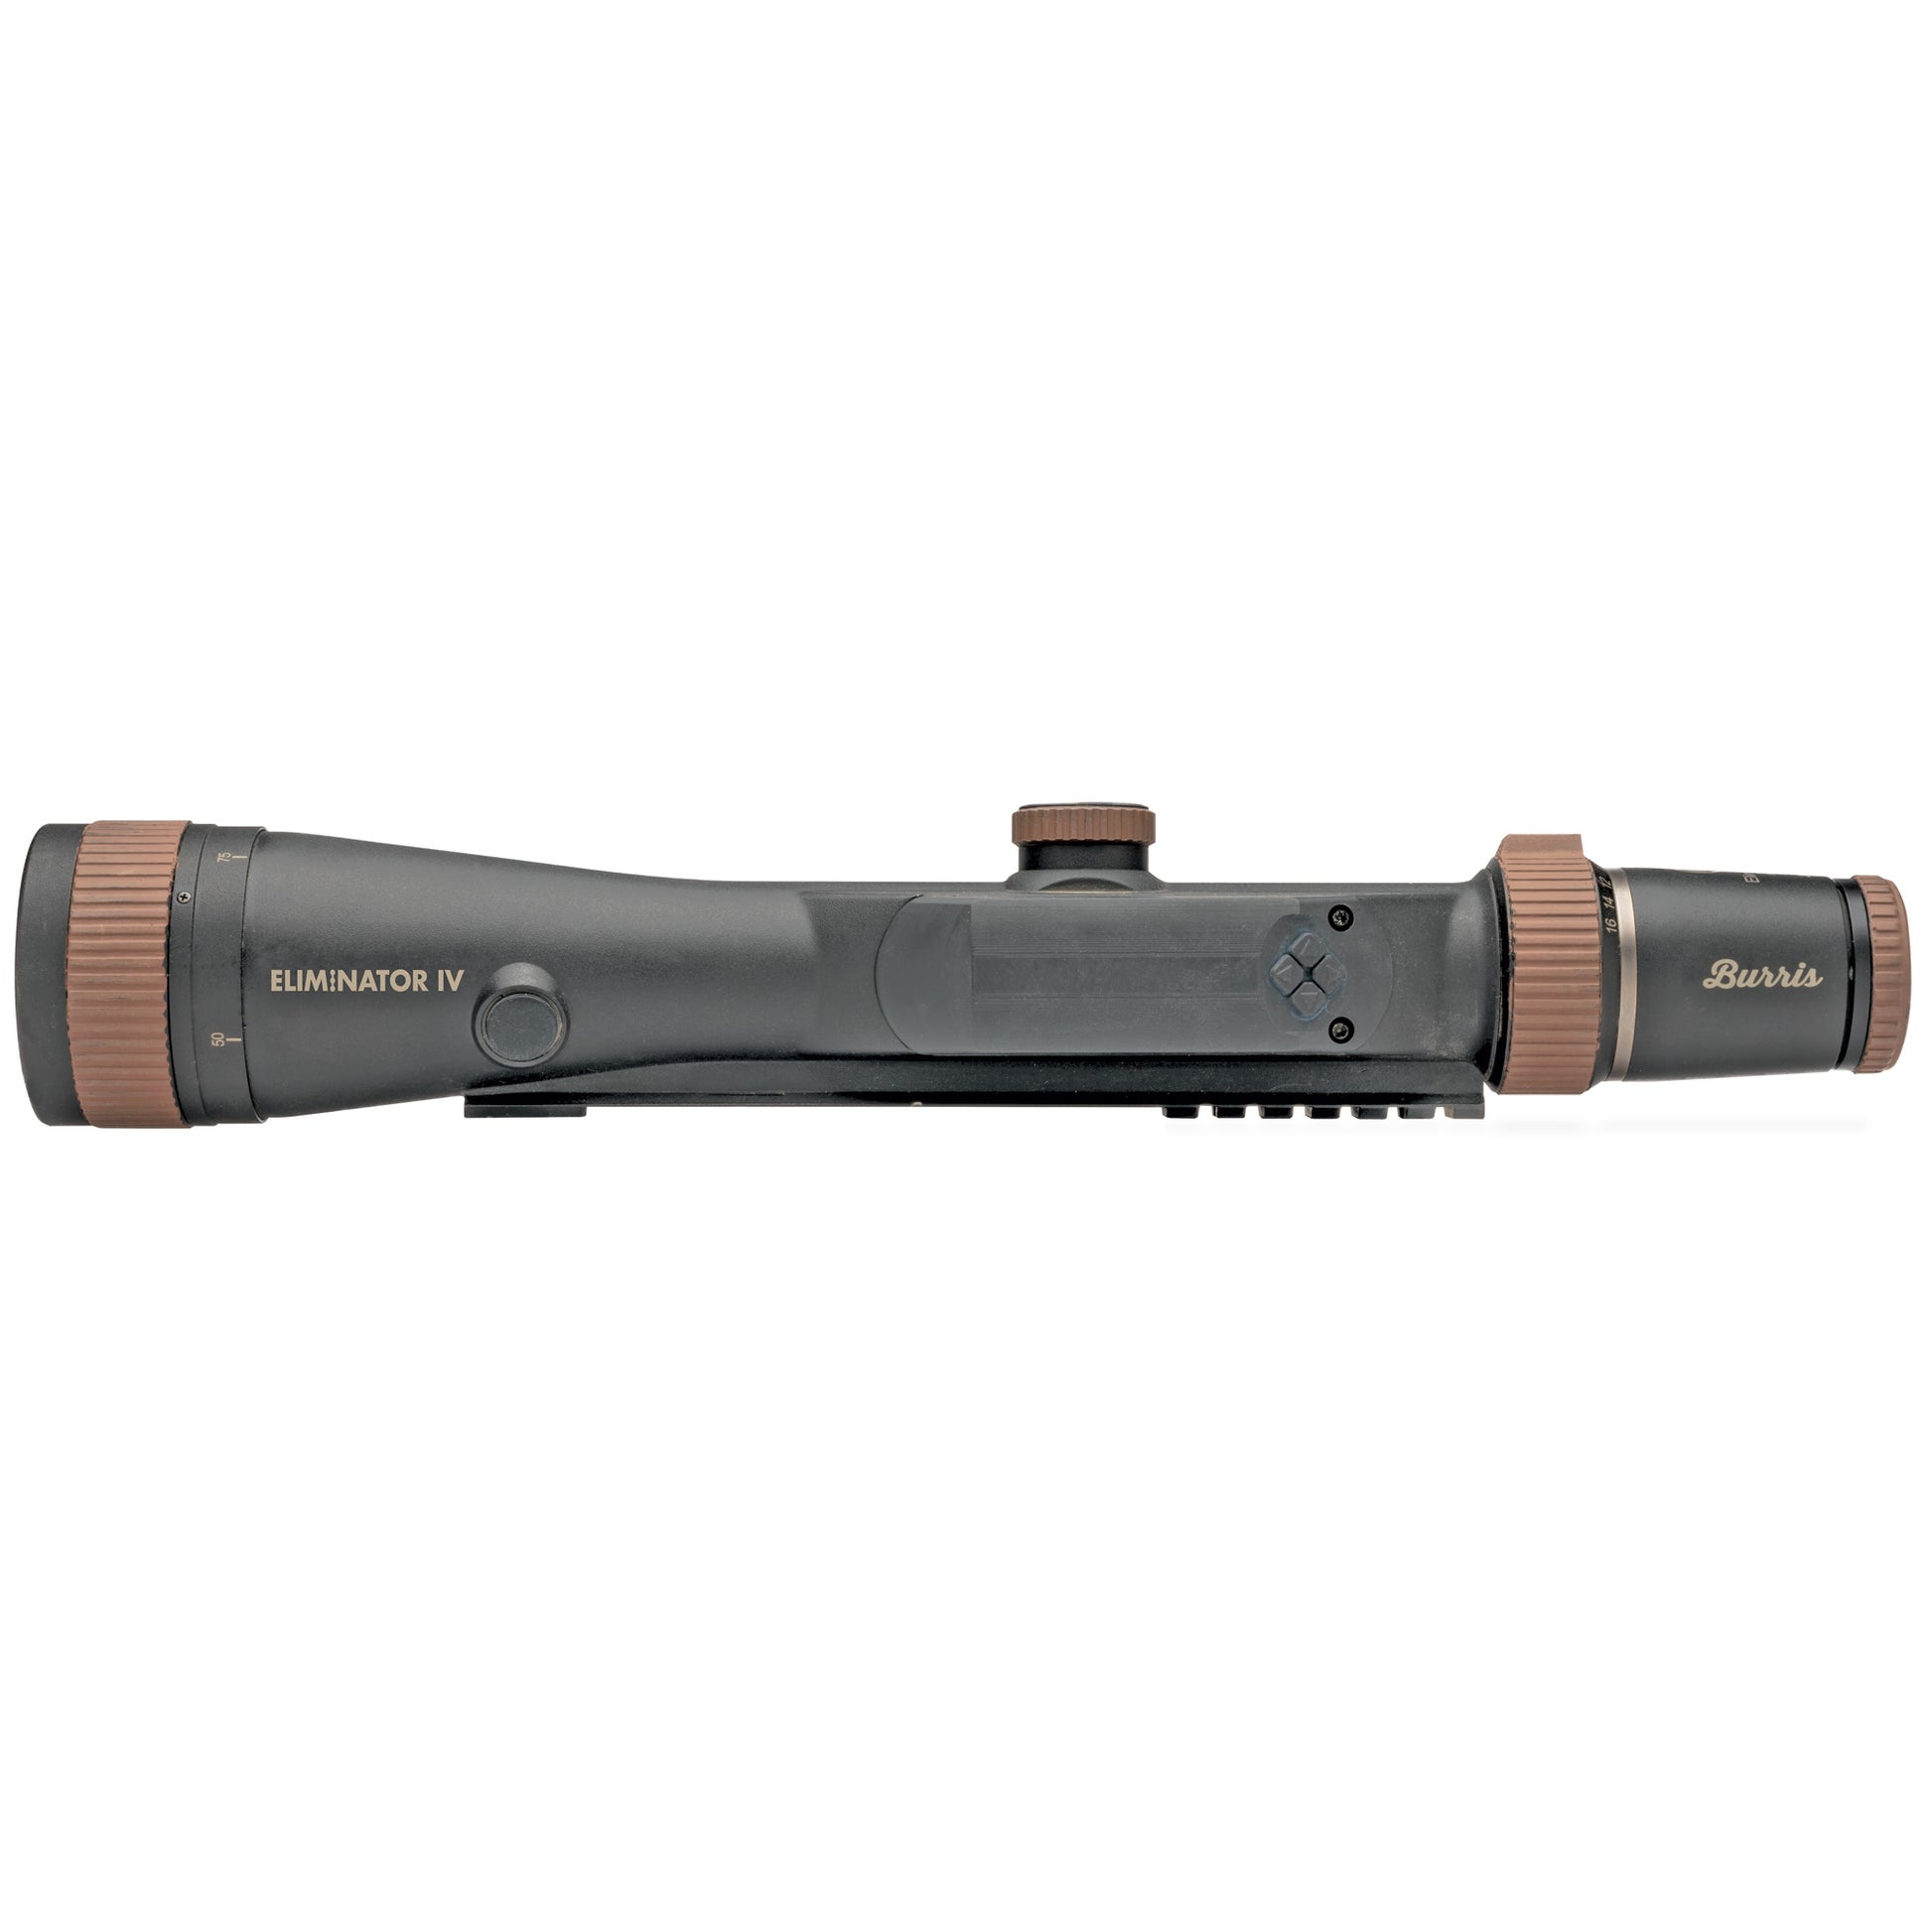 Burris Eliminator IV Rifle Scope 4-16X50mm X96 Range Finder & Scope 200133 - California Shooting Supplies